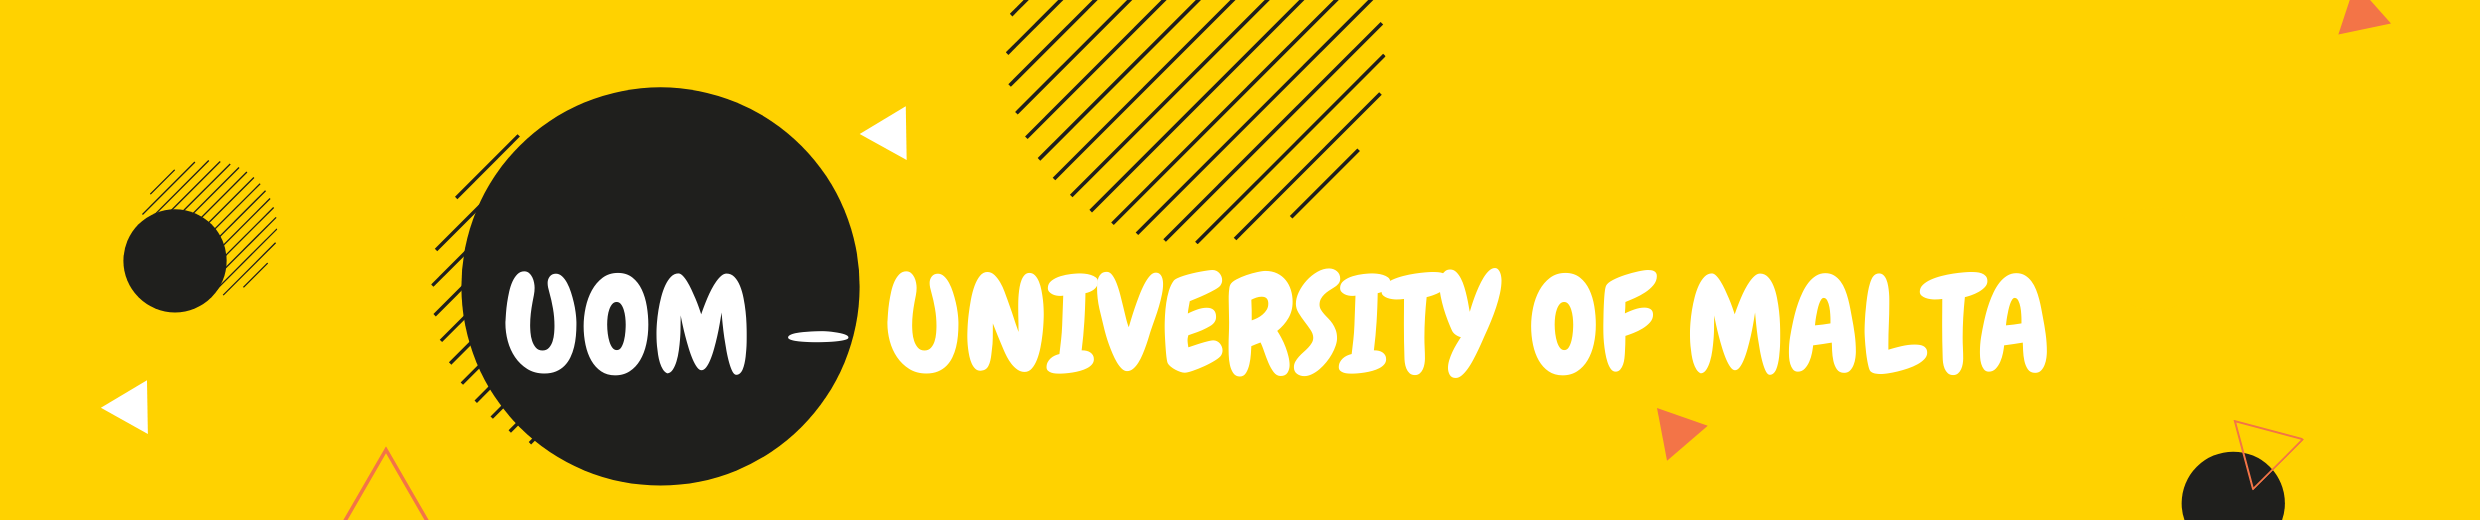 UoM - University of Malta banner